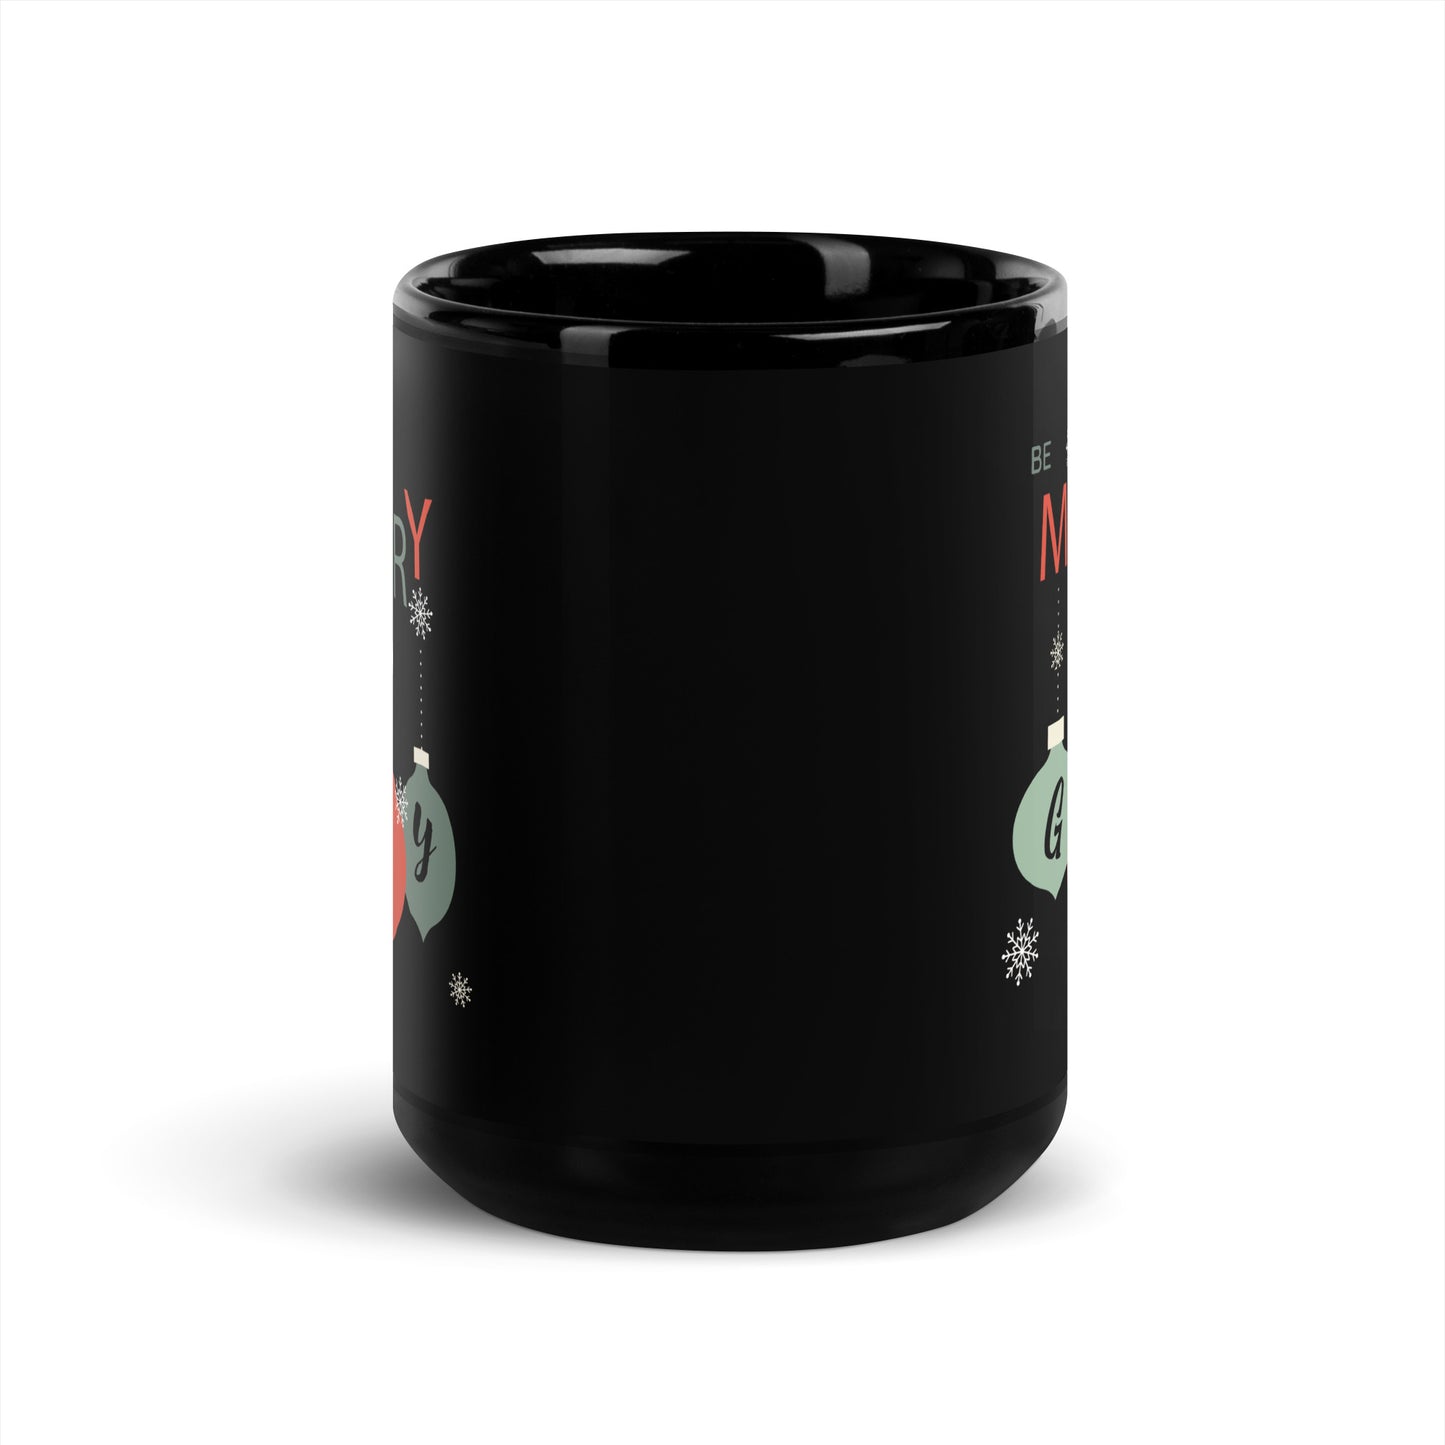 Be Merry & Gay Black Glossy Mug